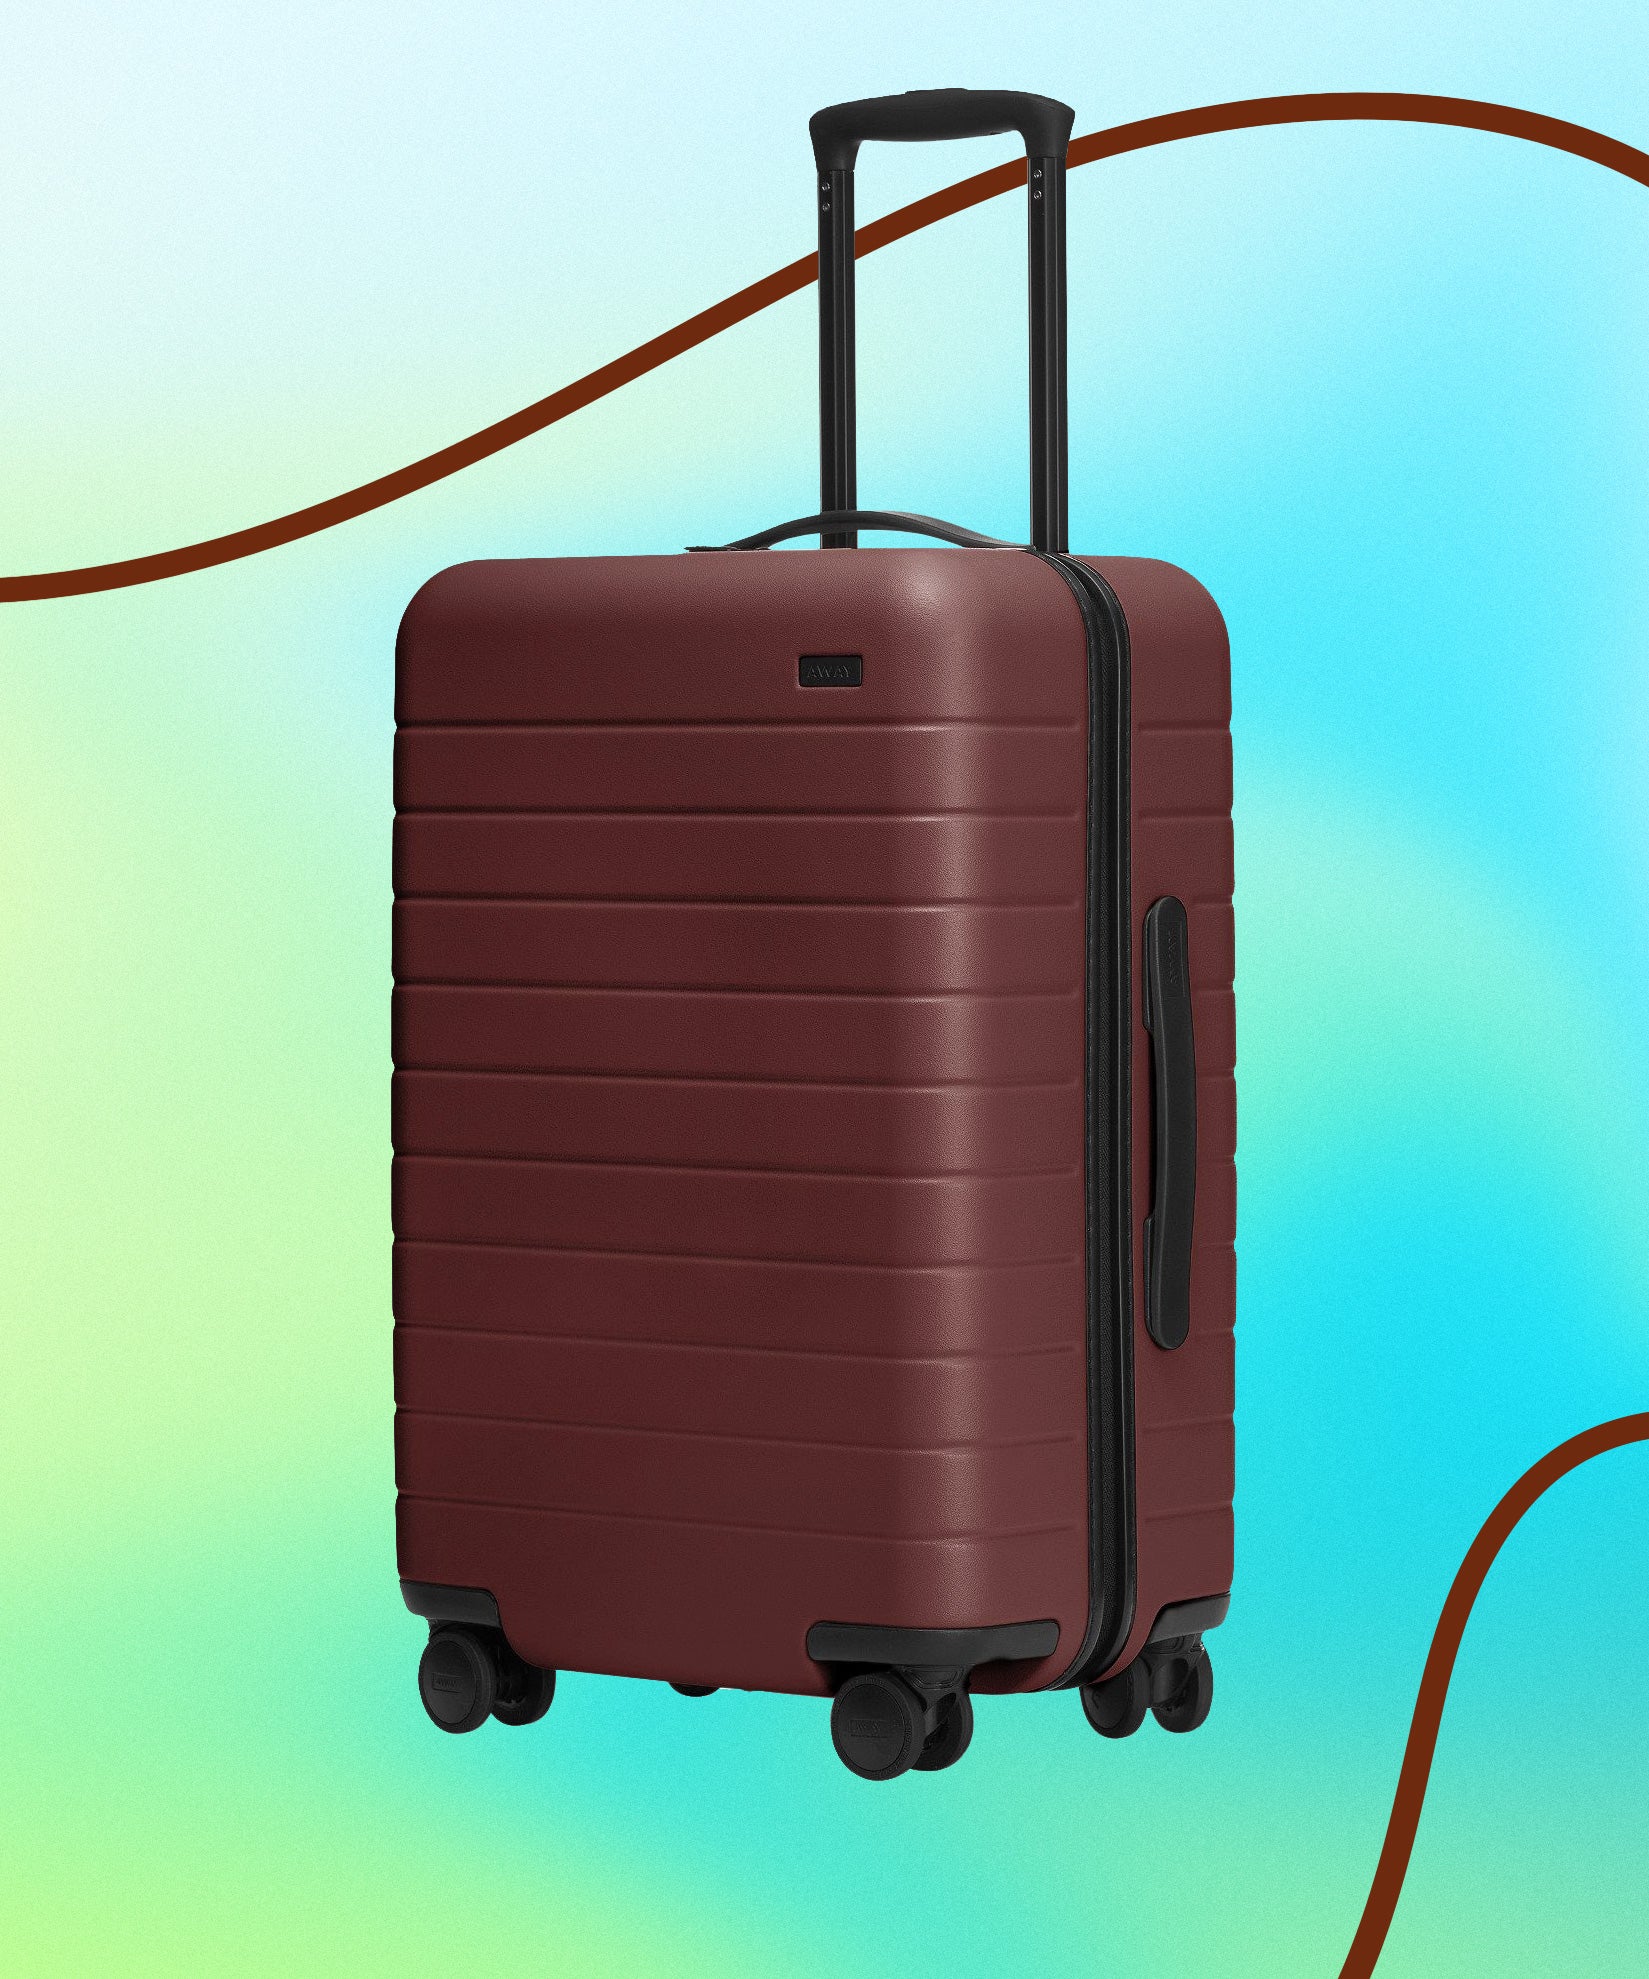 Away Suitcases